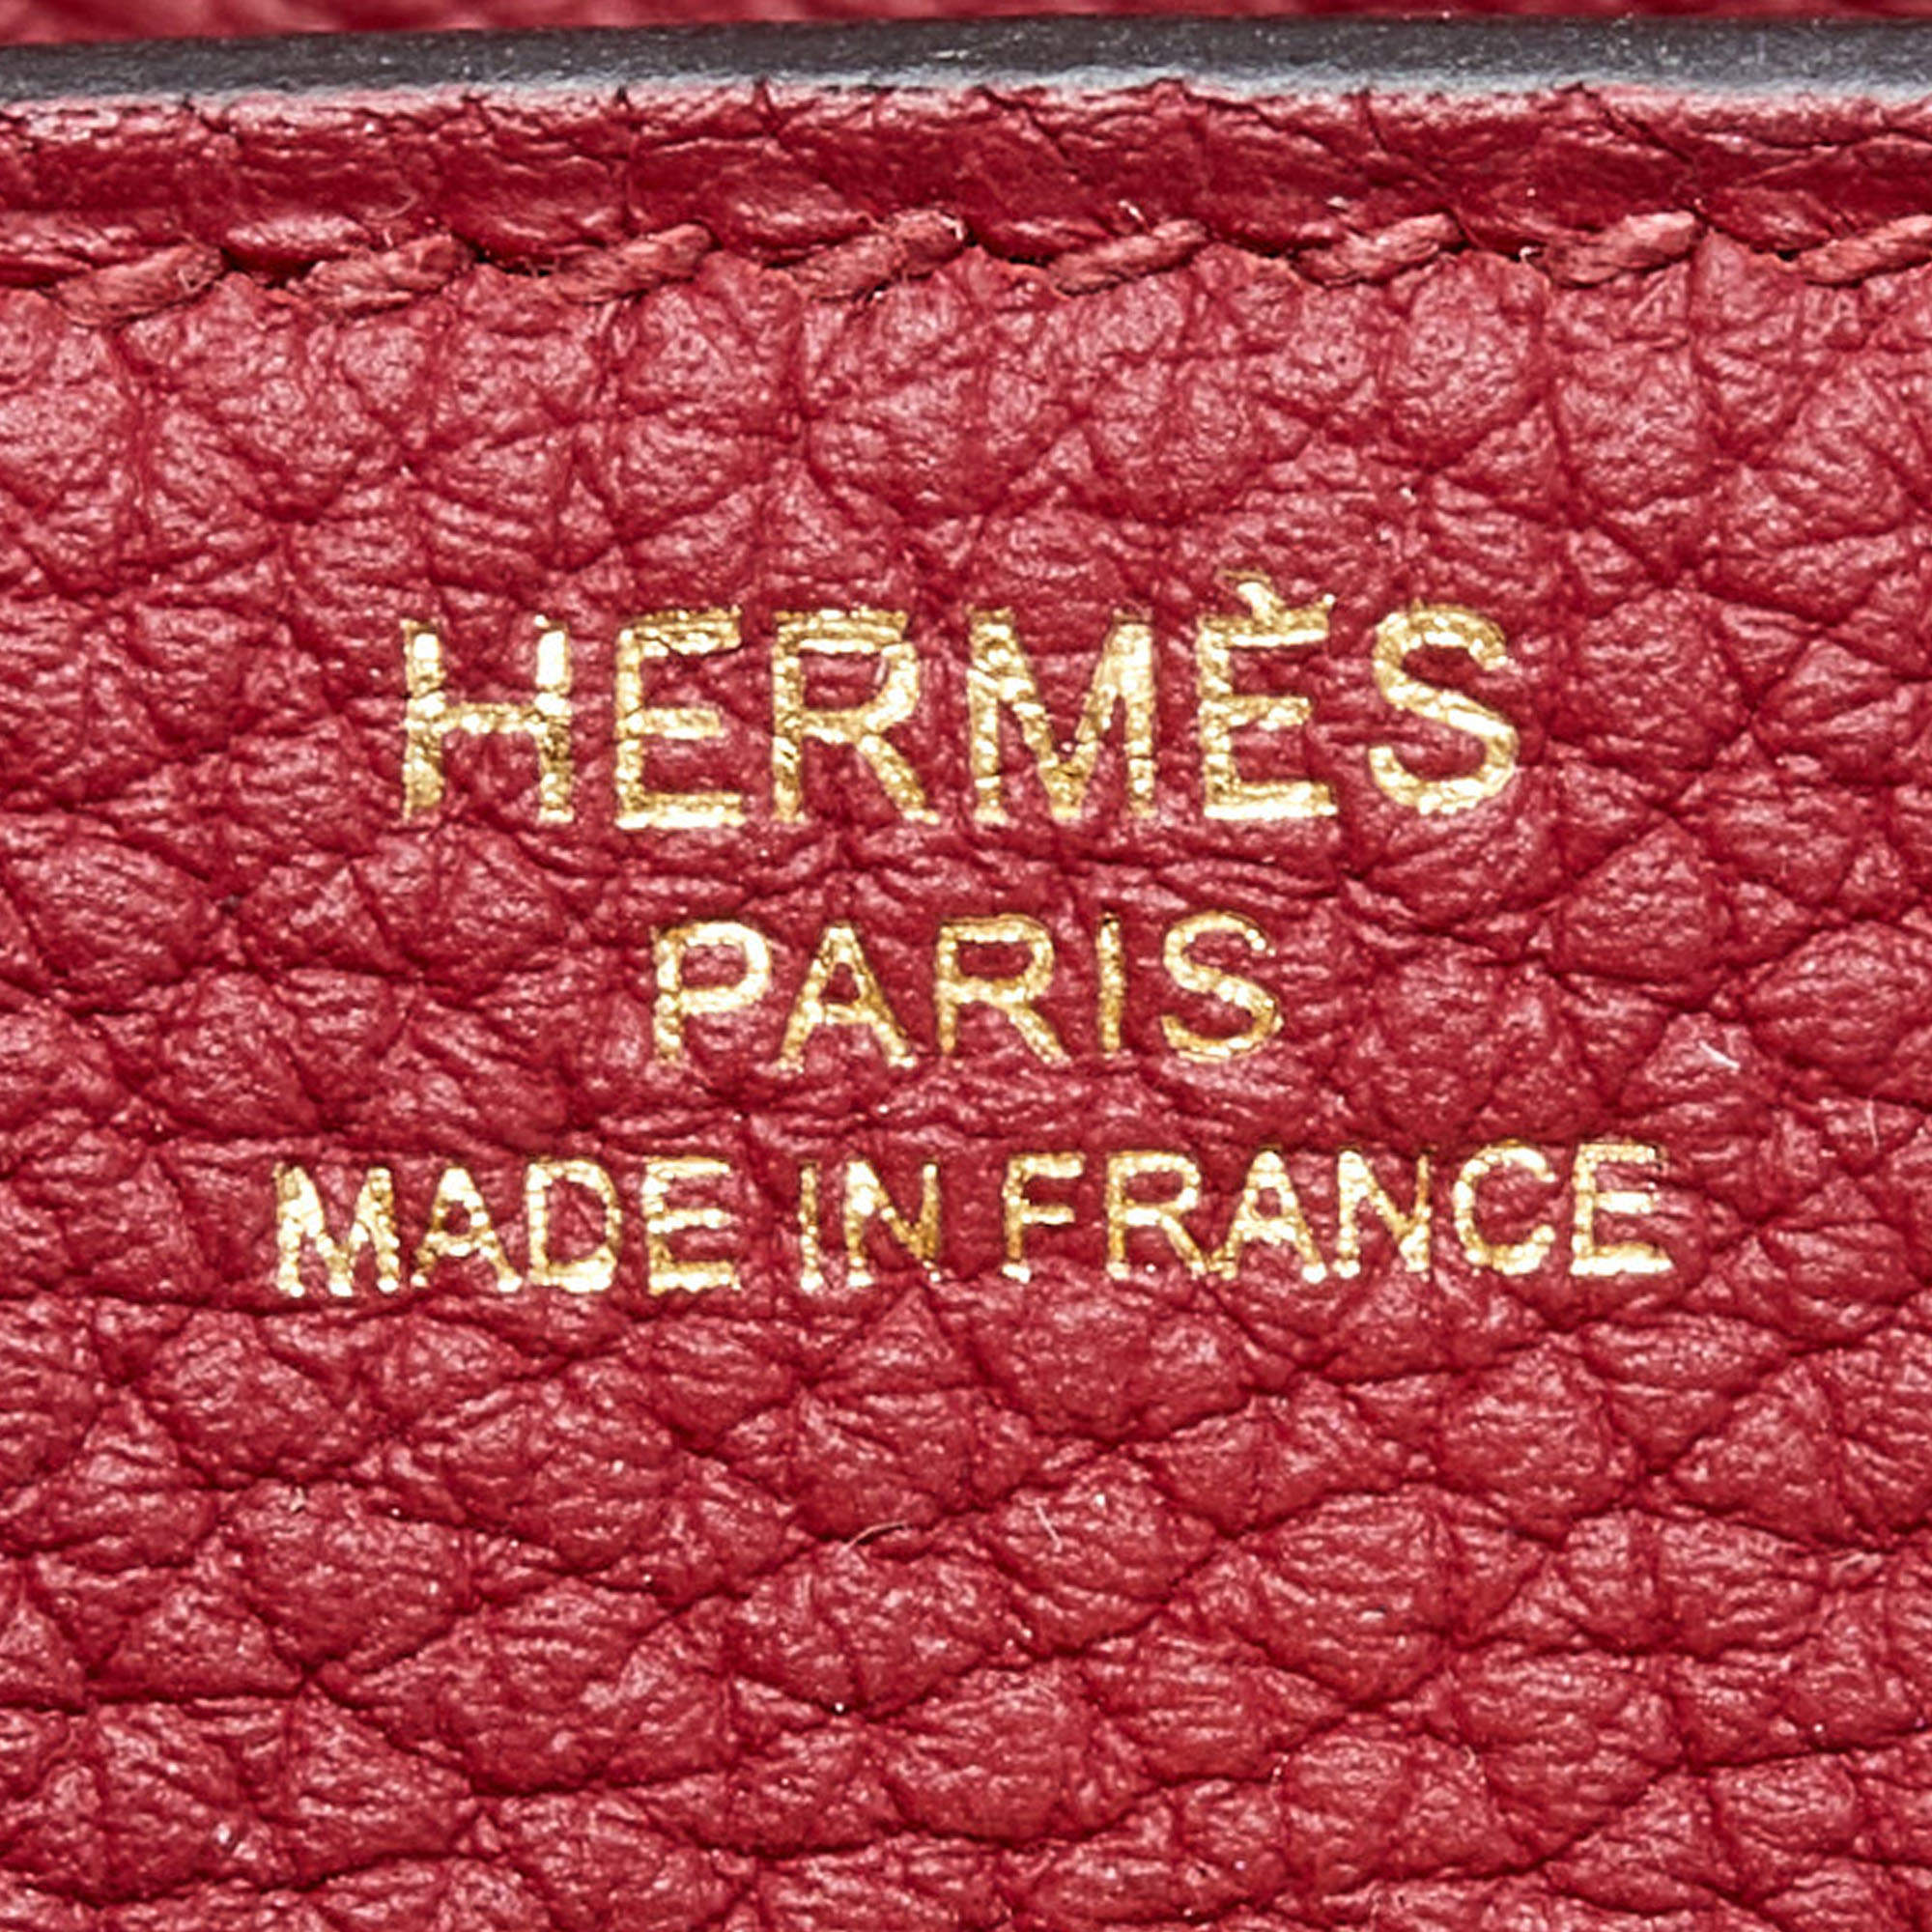 Hermès Rouge Grenat Togo Birkin 25 with Gold Hardware